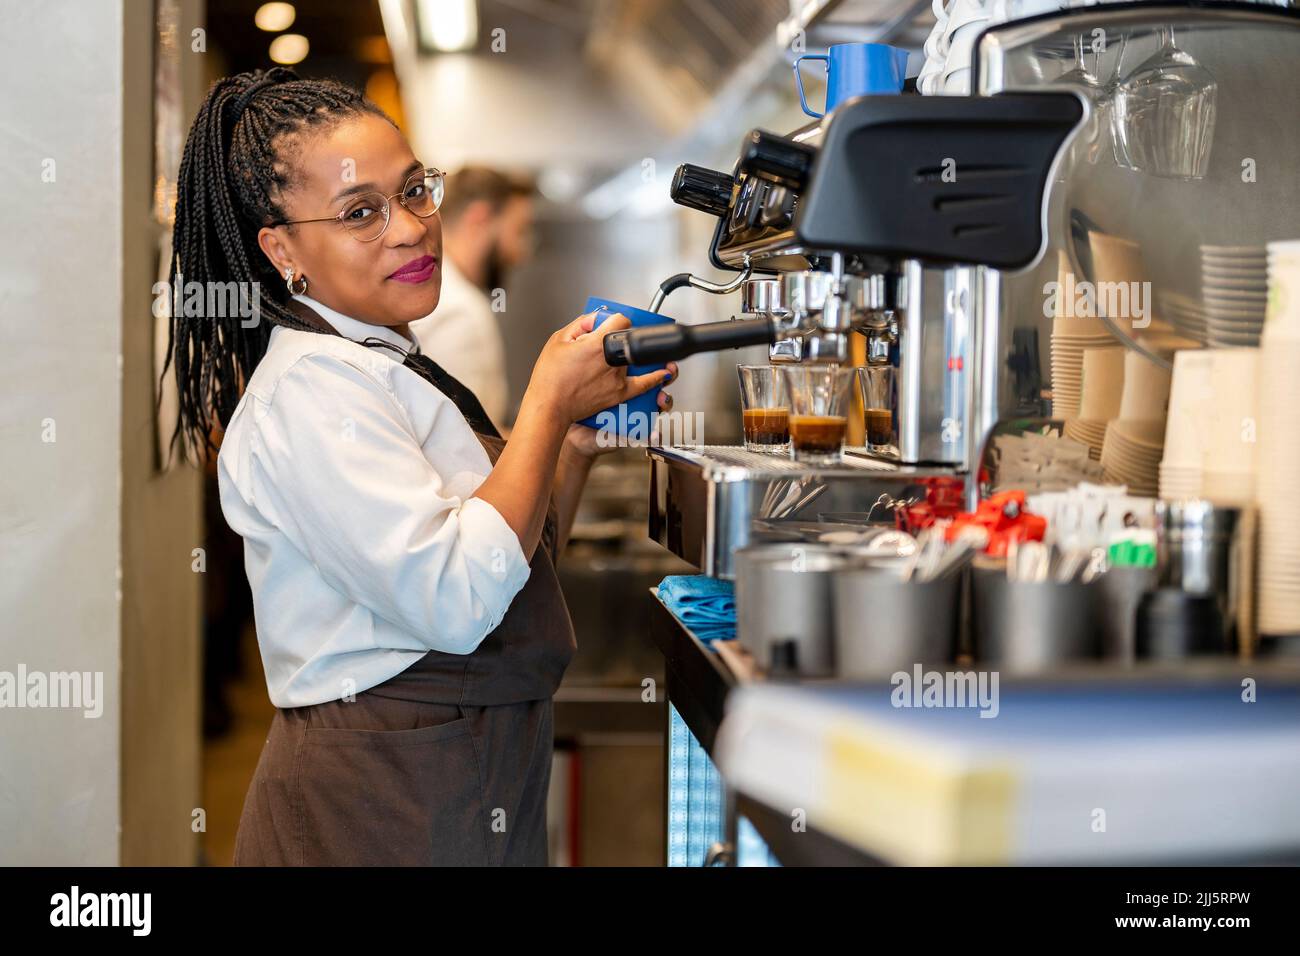 Smiling barista using coffee maker at restaurant kitchen Stock Photo